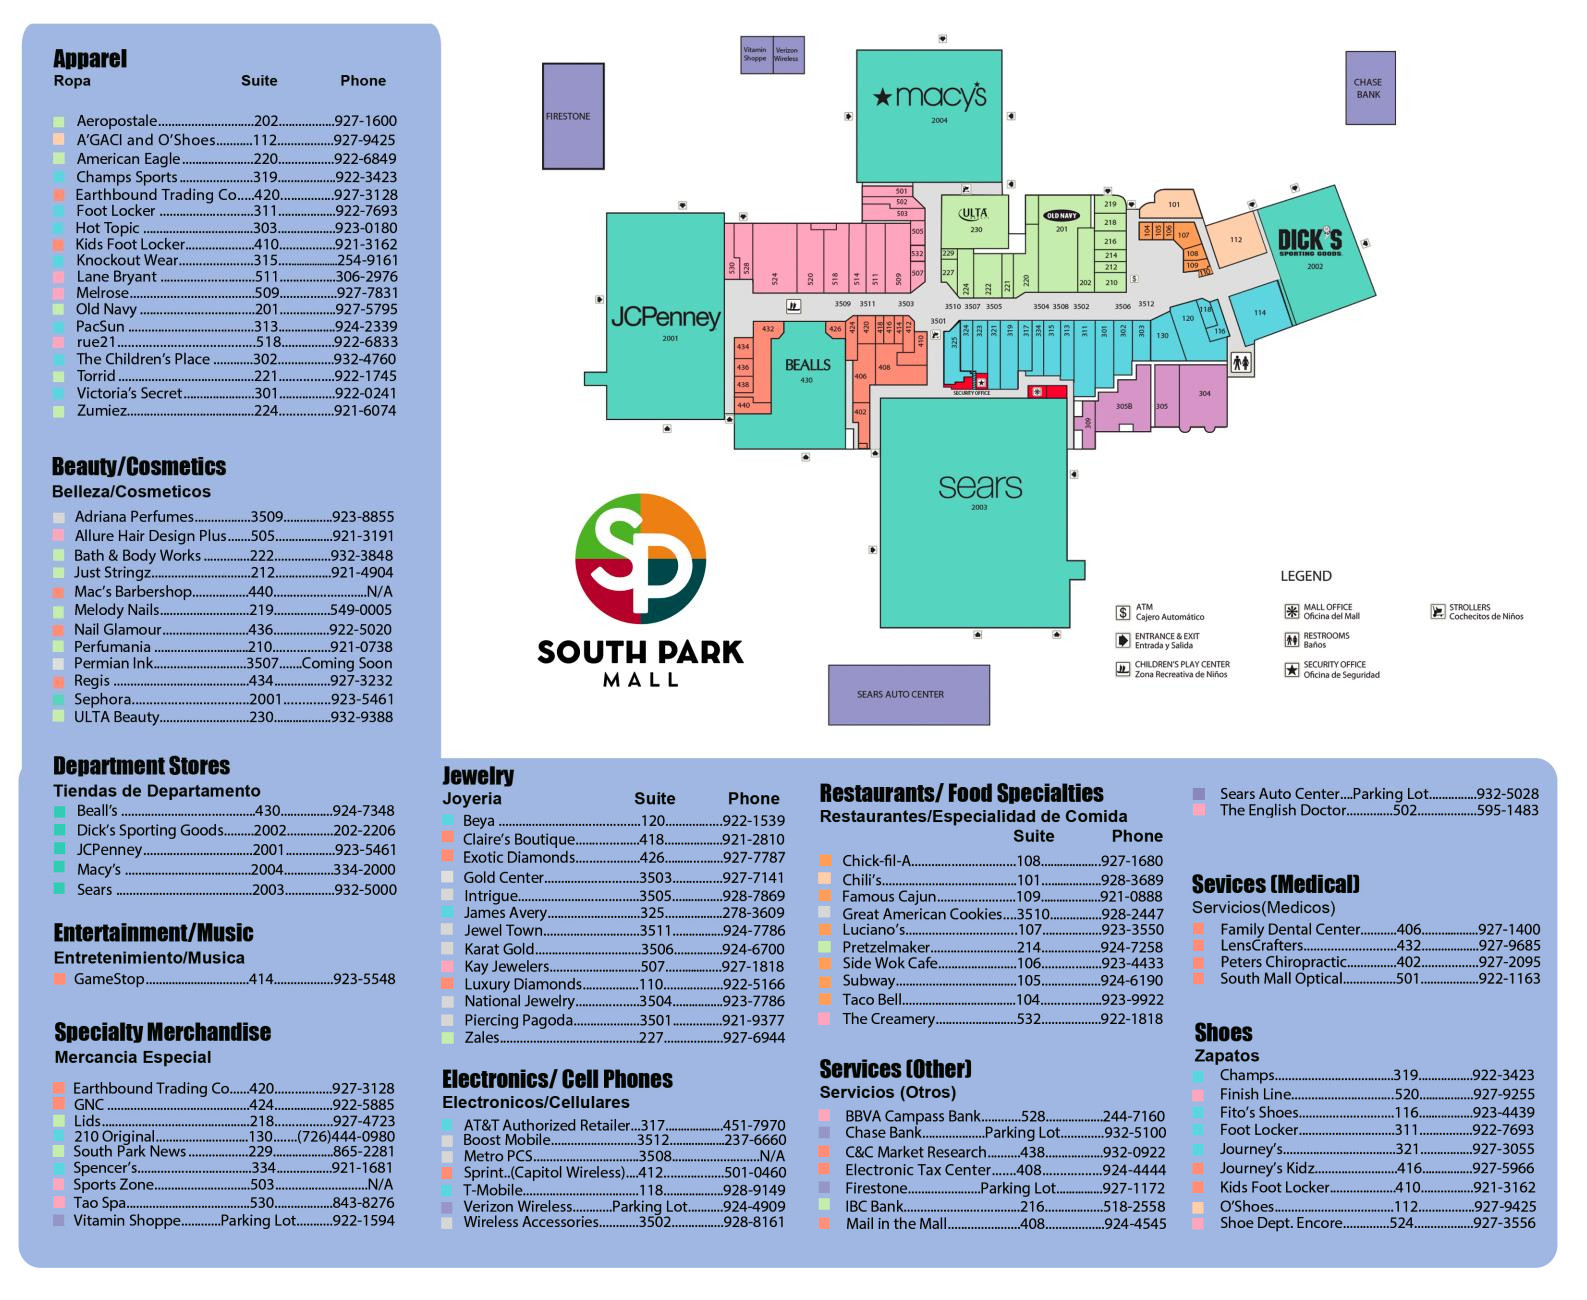 South Park Mall - store list, hours, (location: San Antonio, Texas)